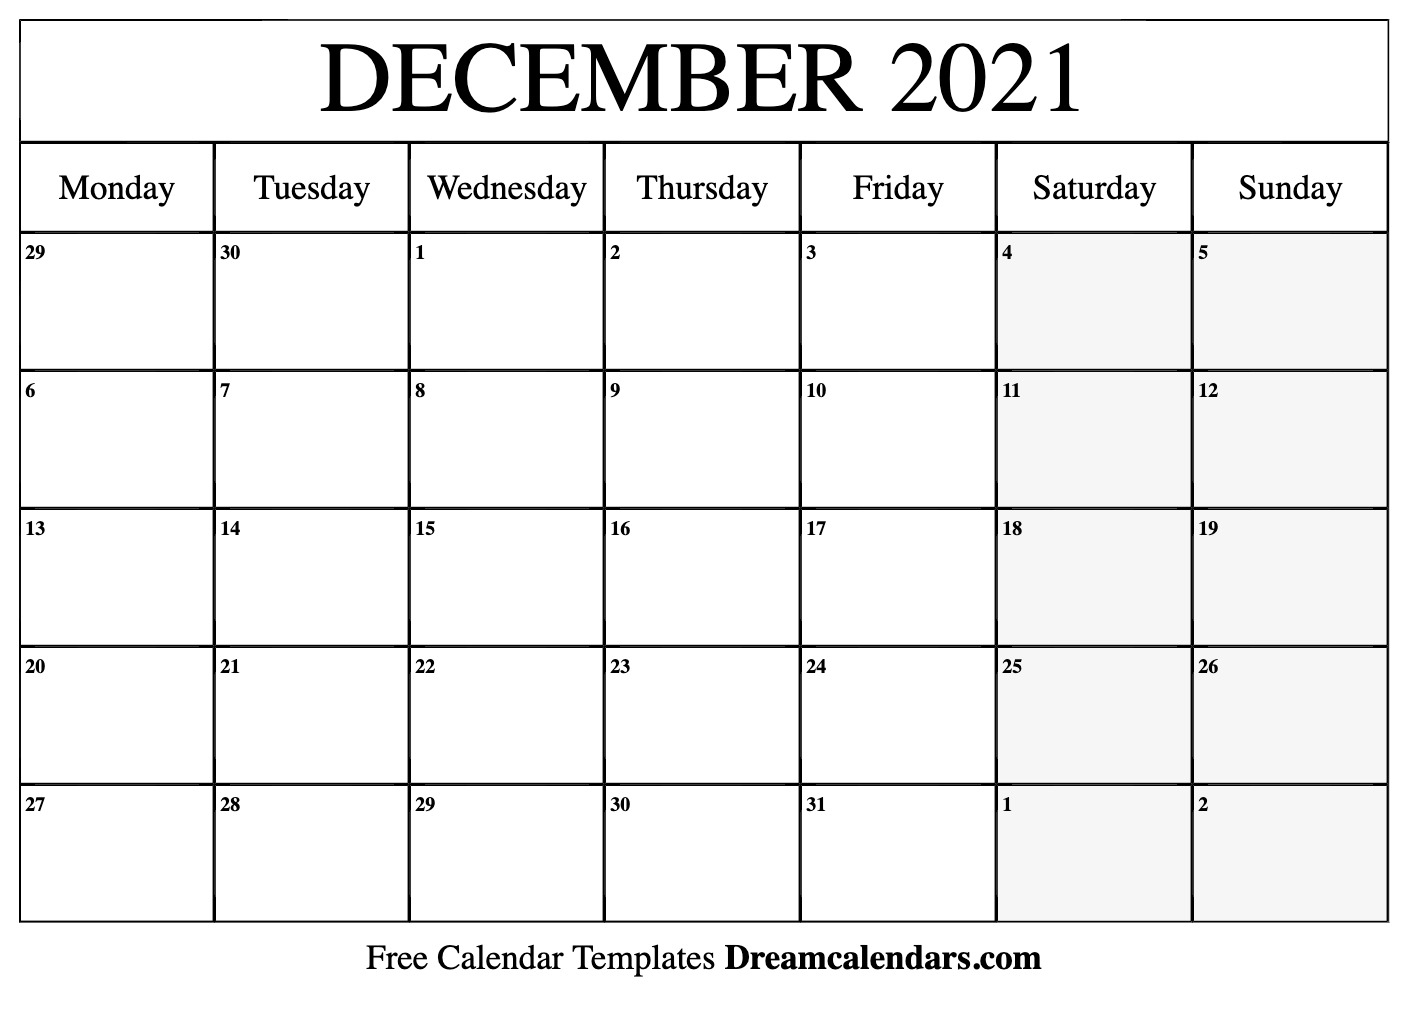 December 2021 Calendar Free Blank Printable Templates